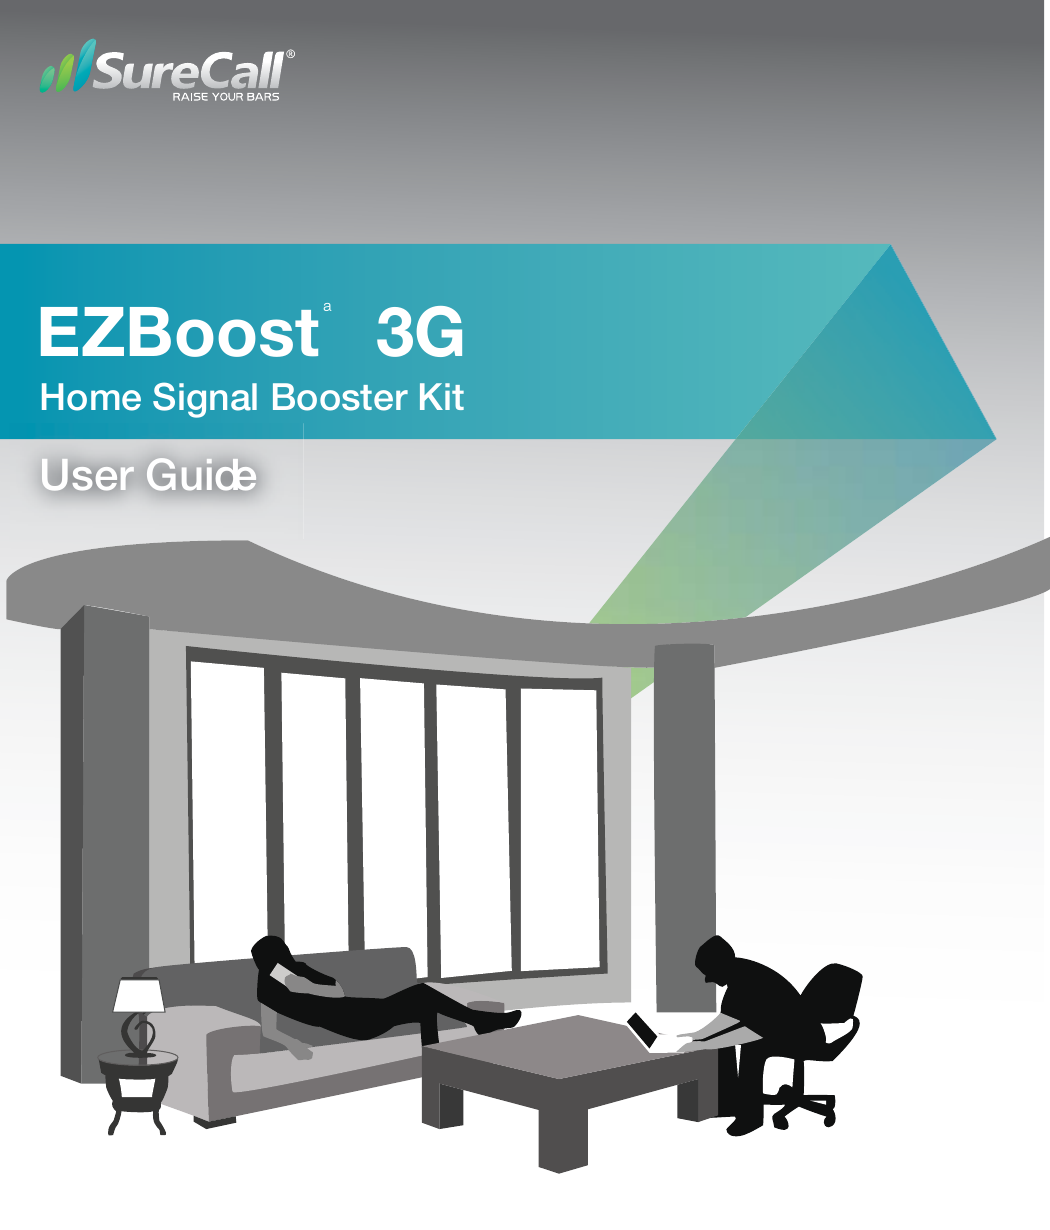  EZBoost   3G ªHome Signal Booster KitUser Guide 